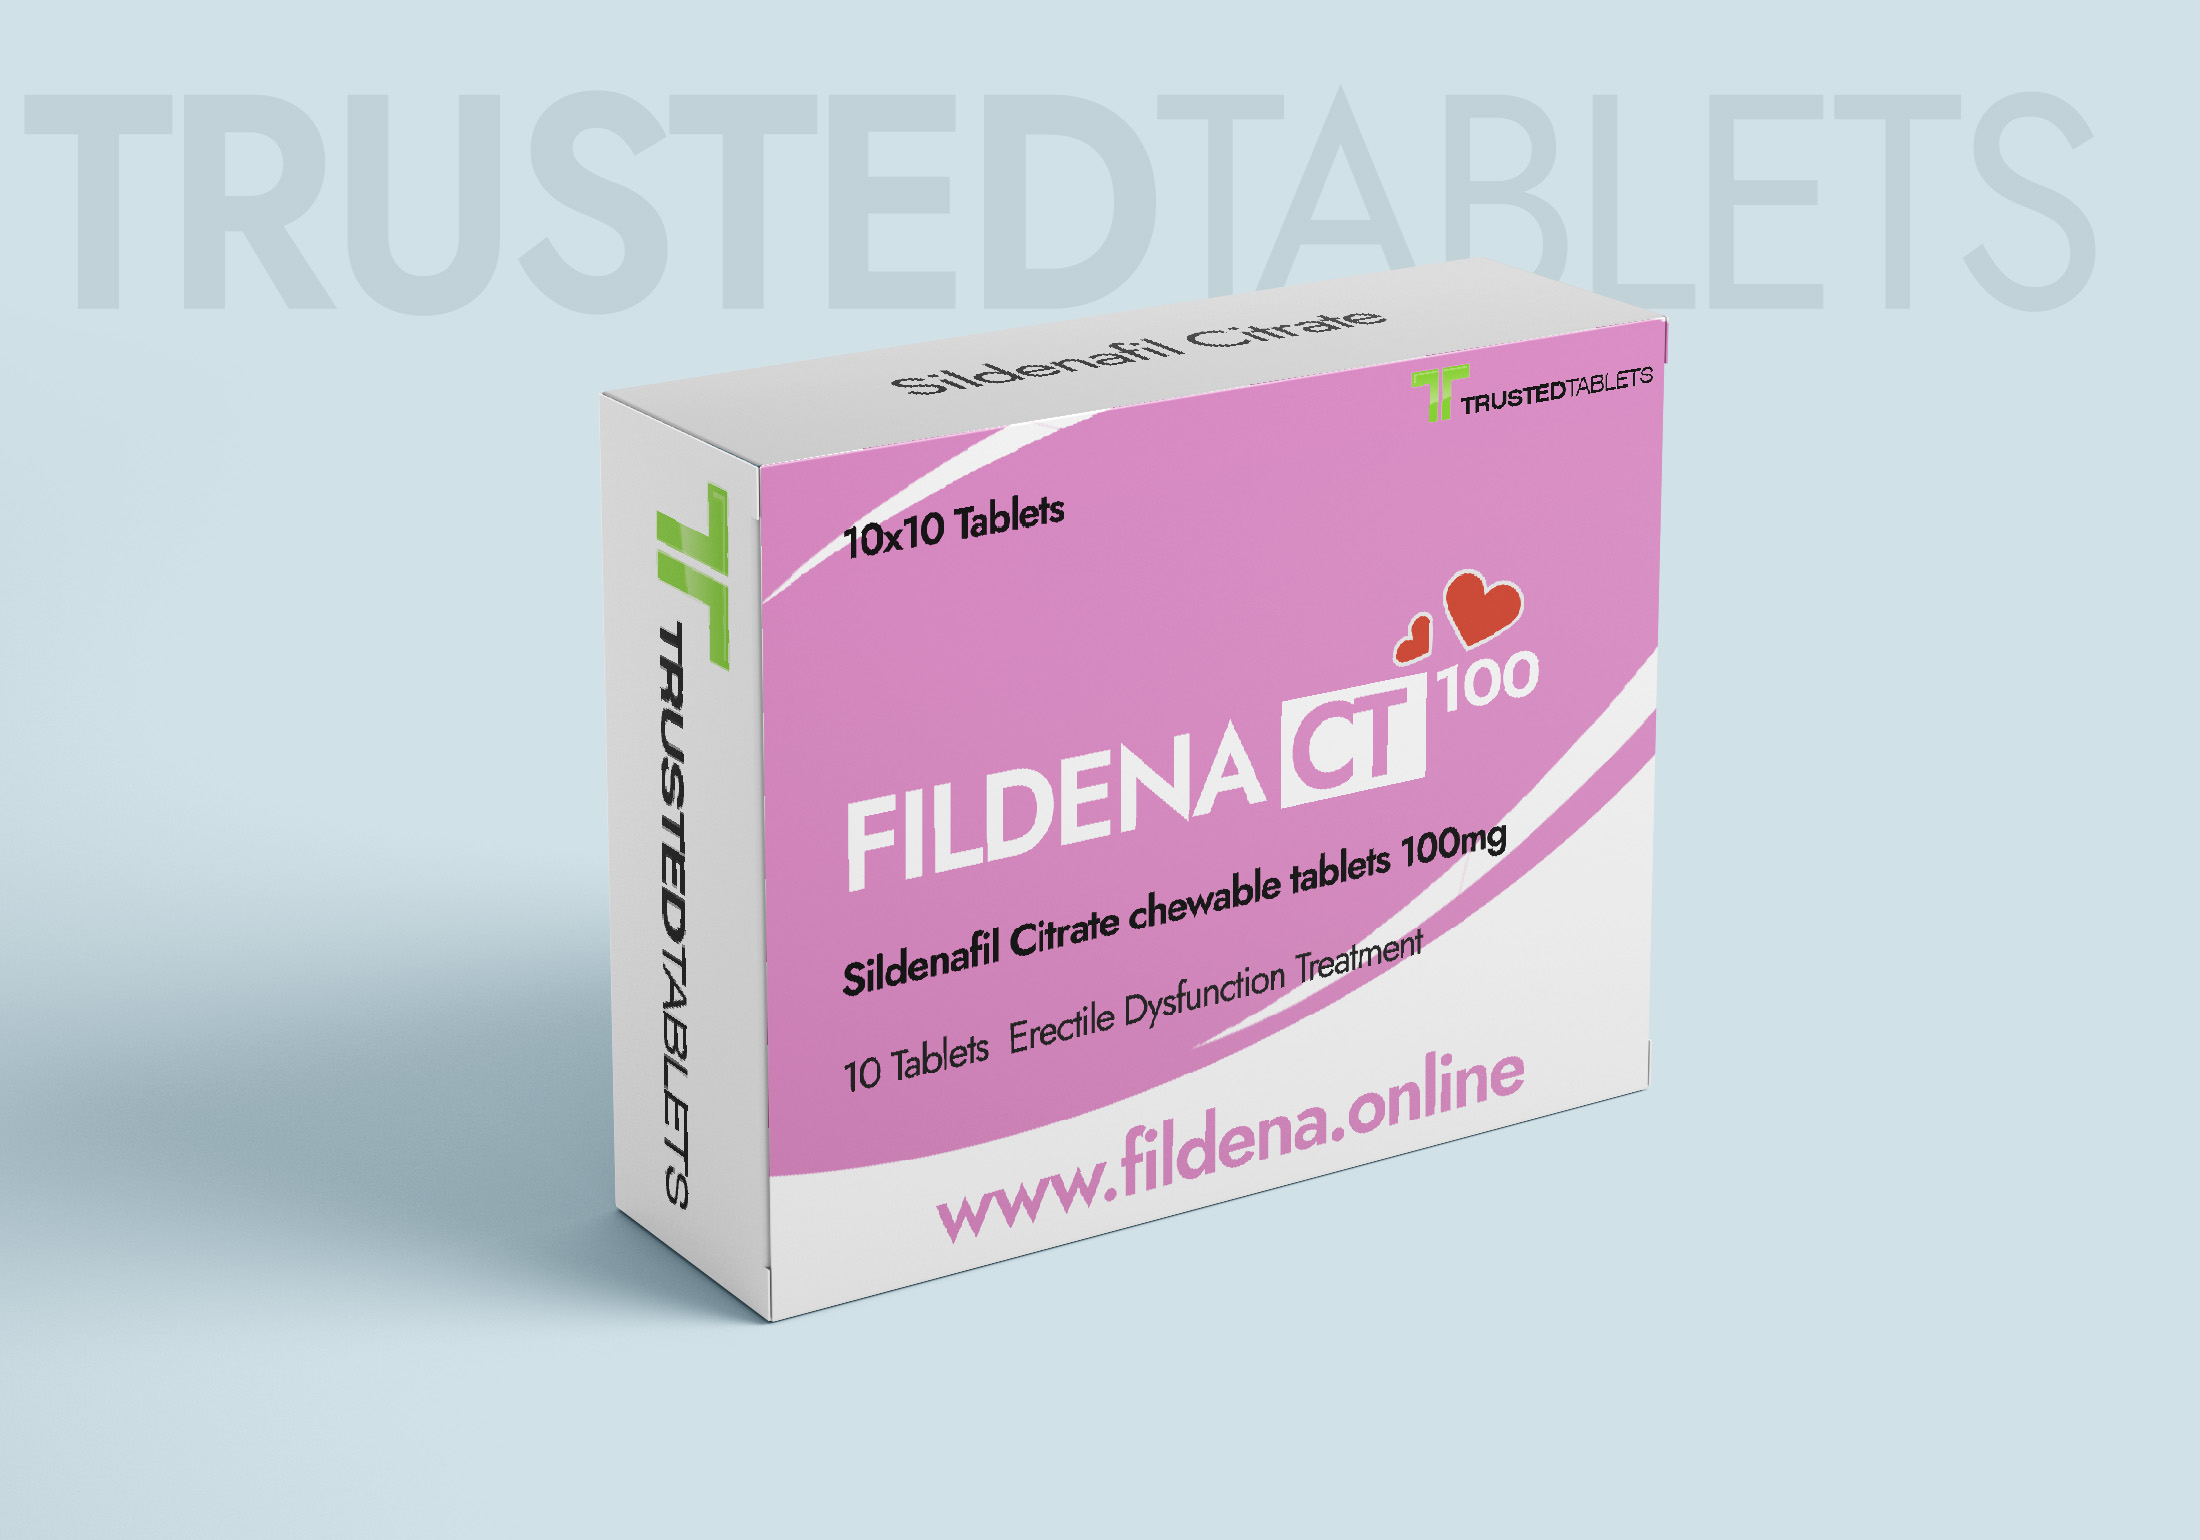 Fildena CT TrustedTablets